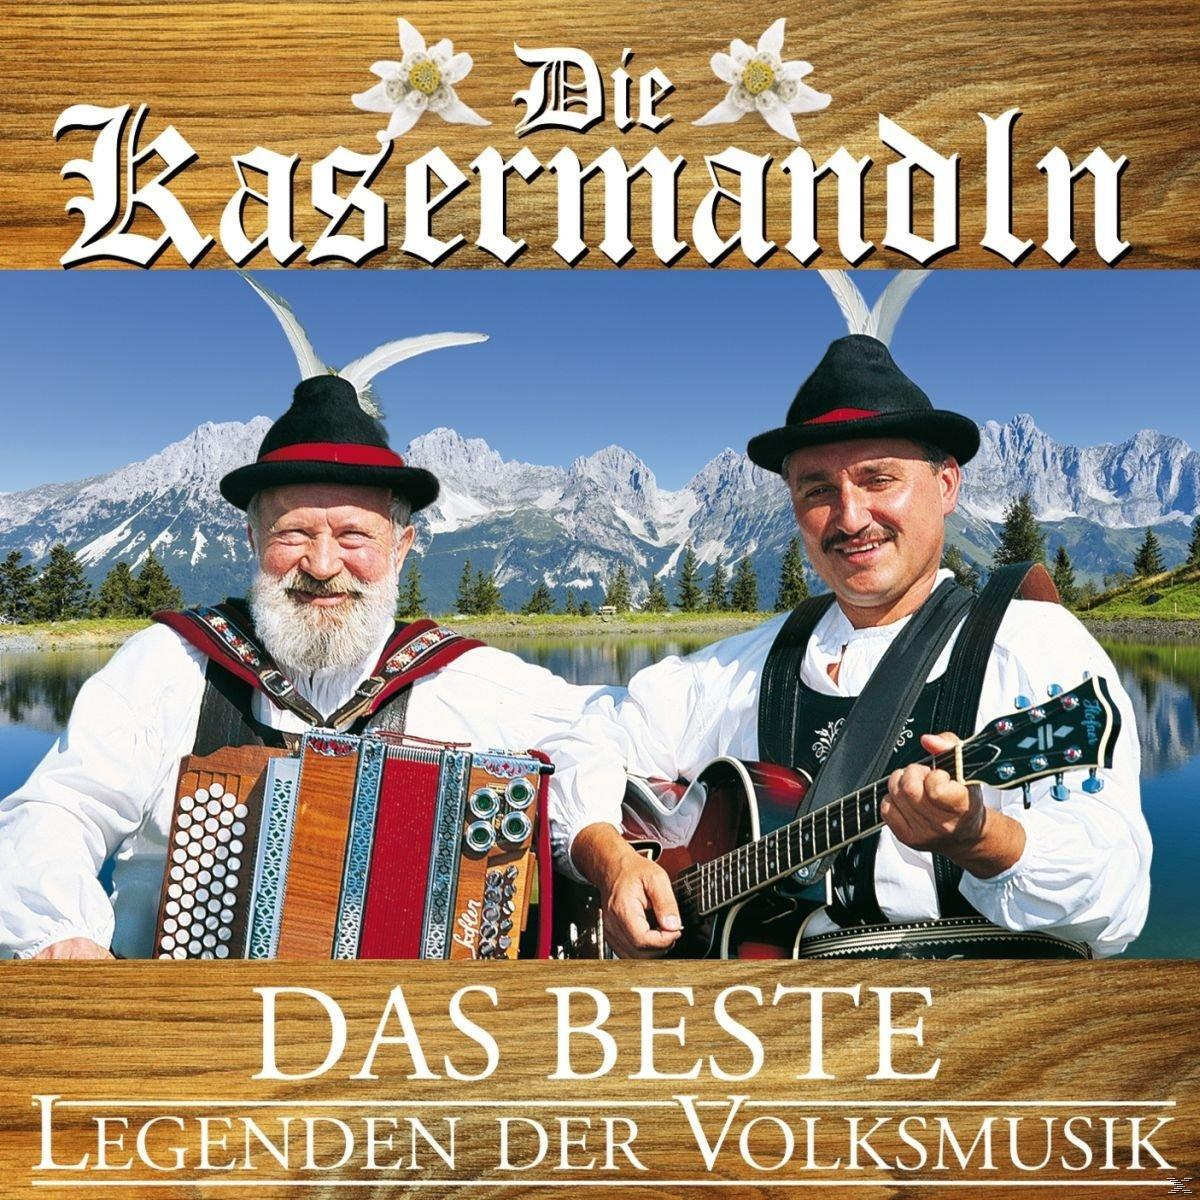 - LEGENDEN Kasermandln (CD) BESTE - - DAS DER VOLKSMUSIK